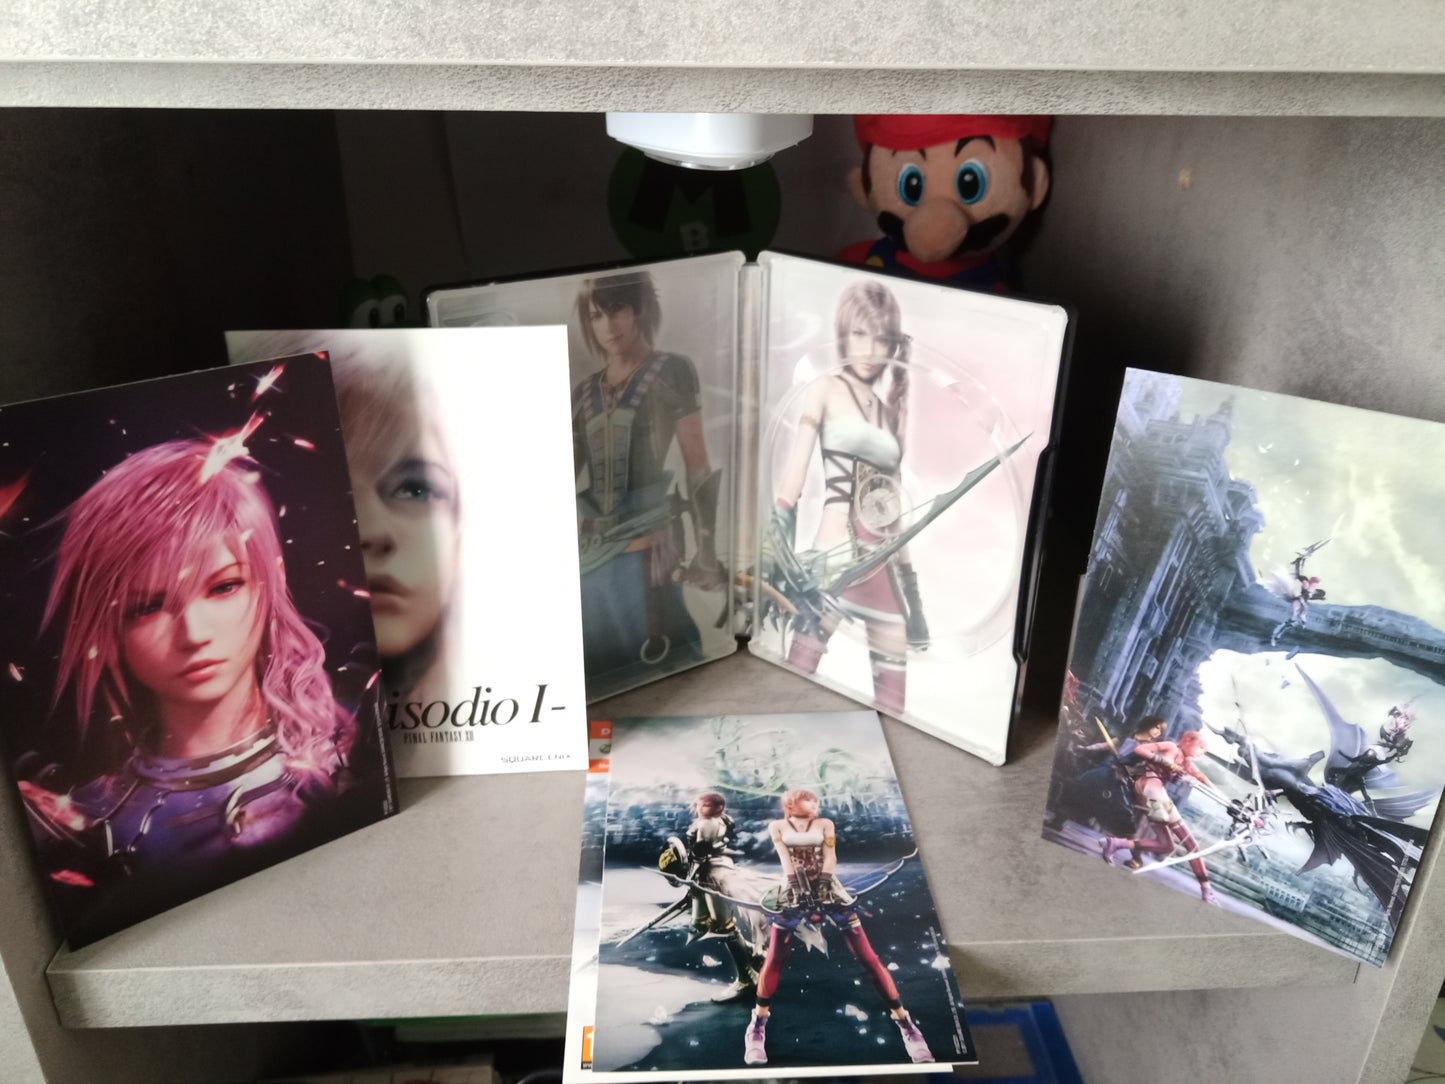 Final Fantasy XIII-2 Crystal Edition